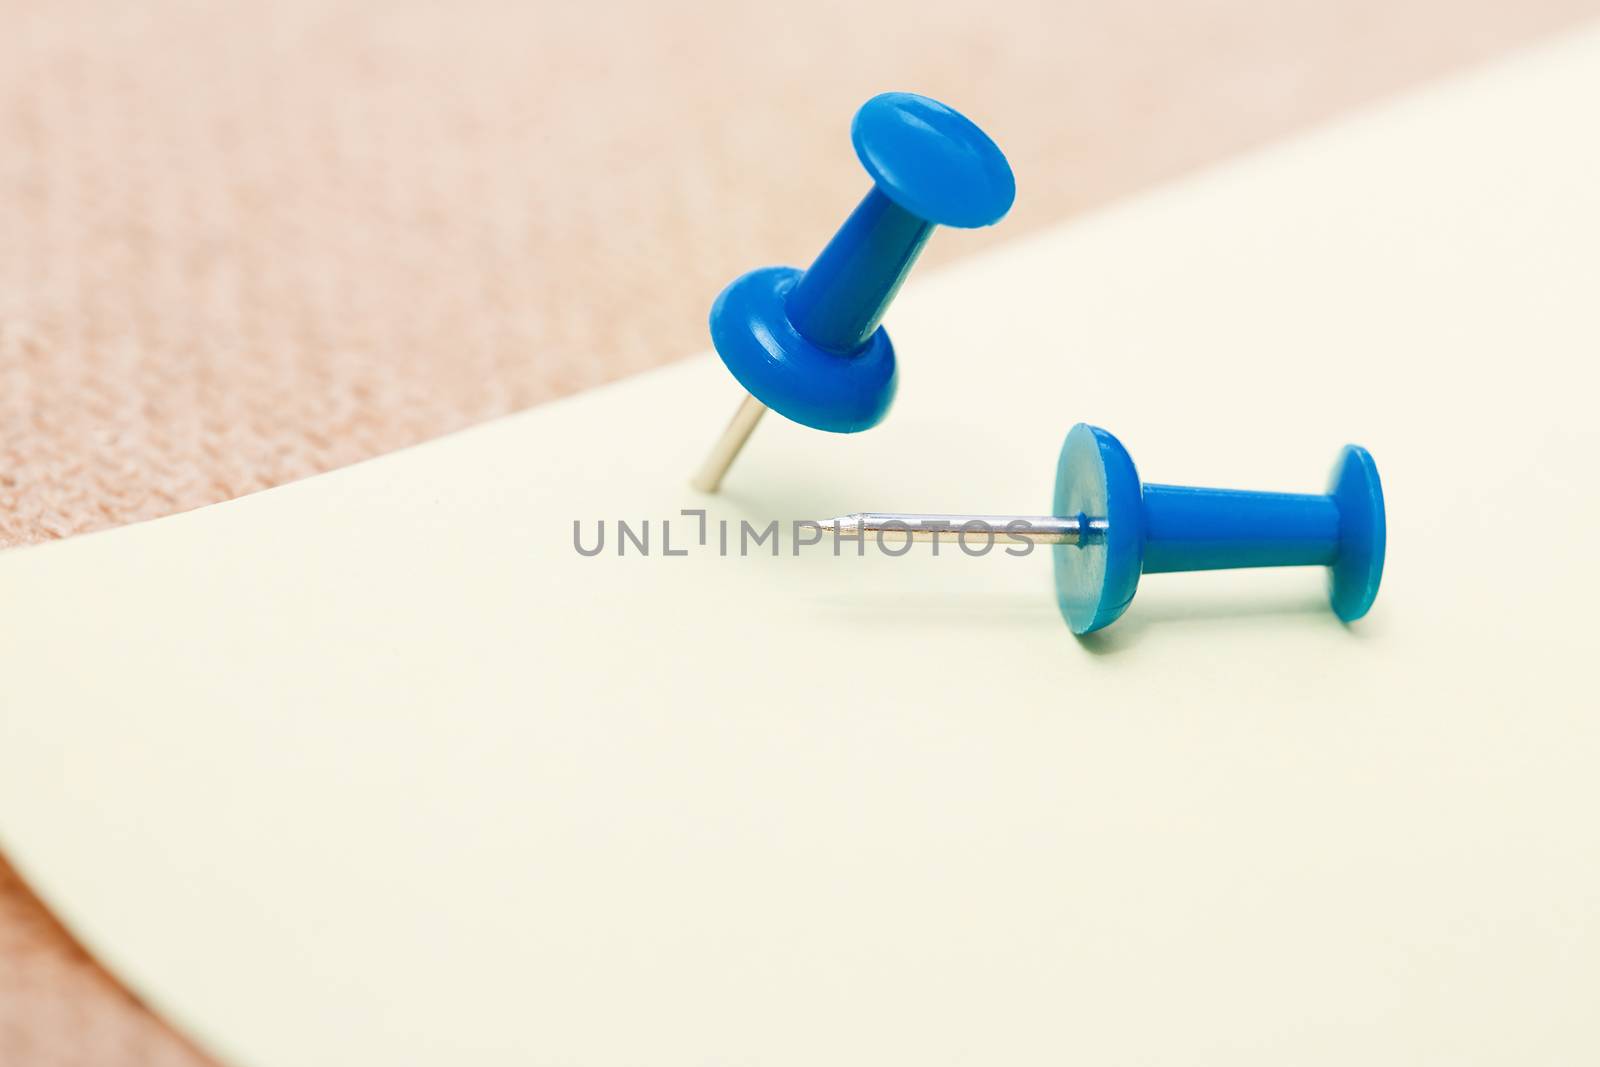 Adhesive note and blue pushpins. Close-up view